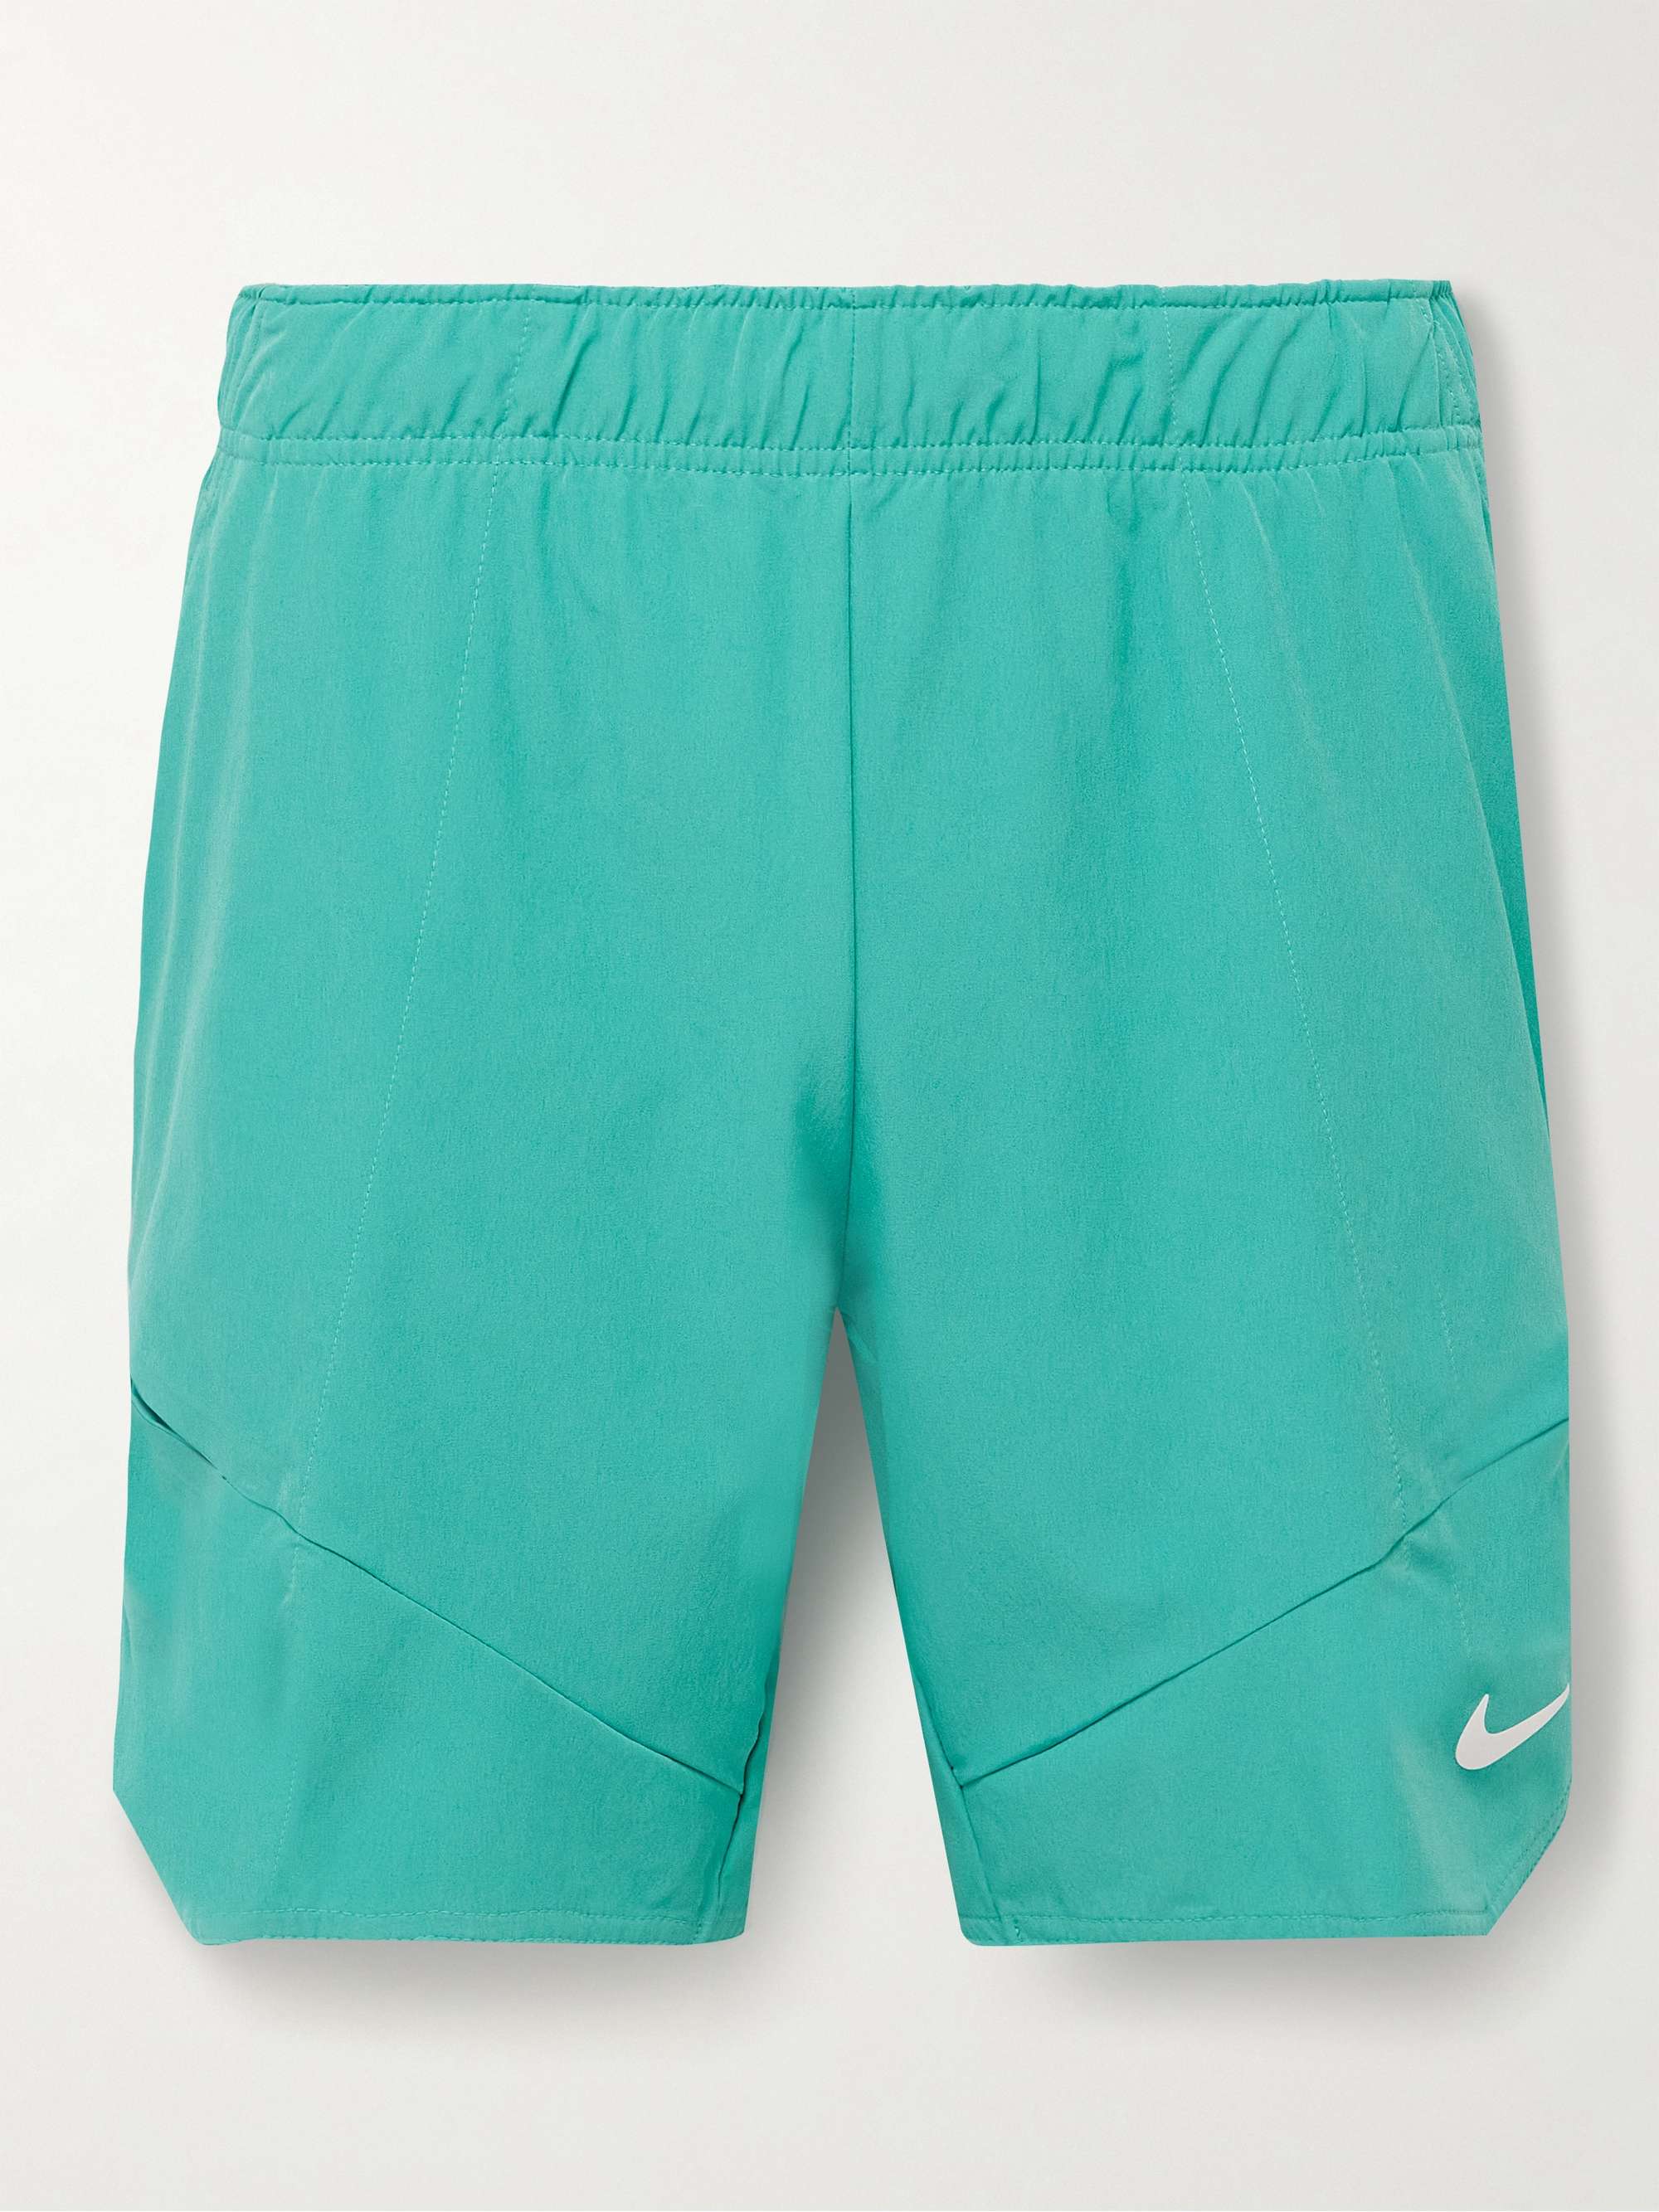 NikeCourt Dri-FIT Advantage Men's Tennis Shorts.